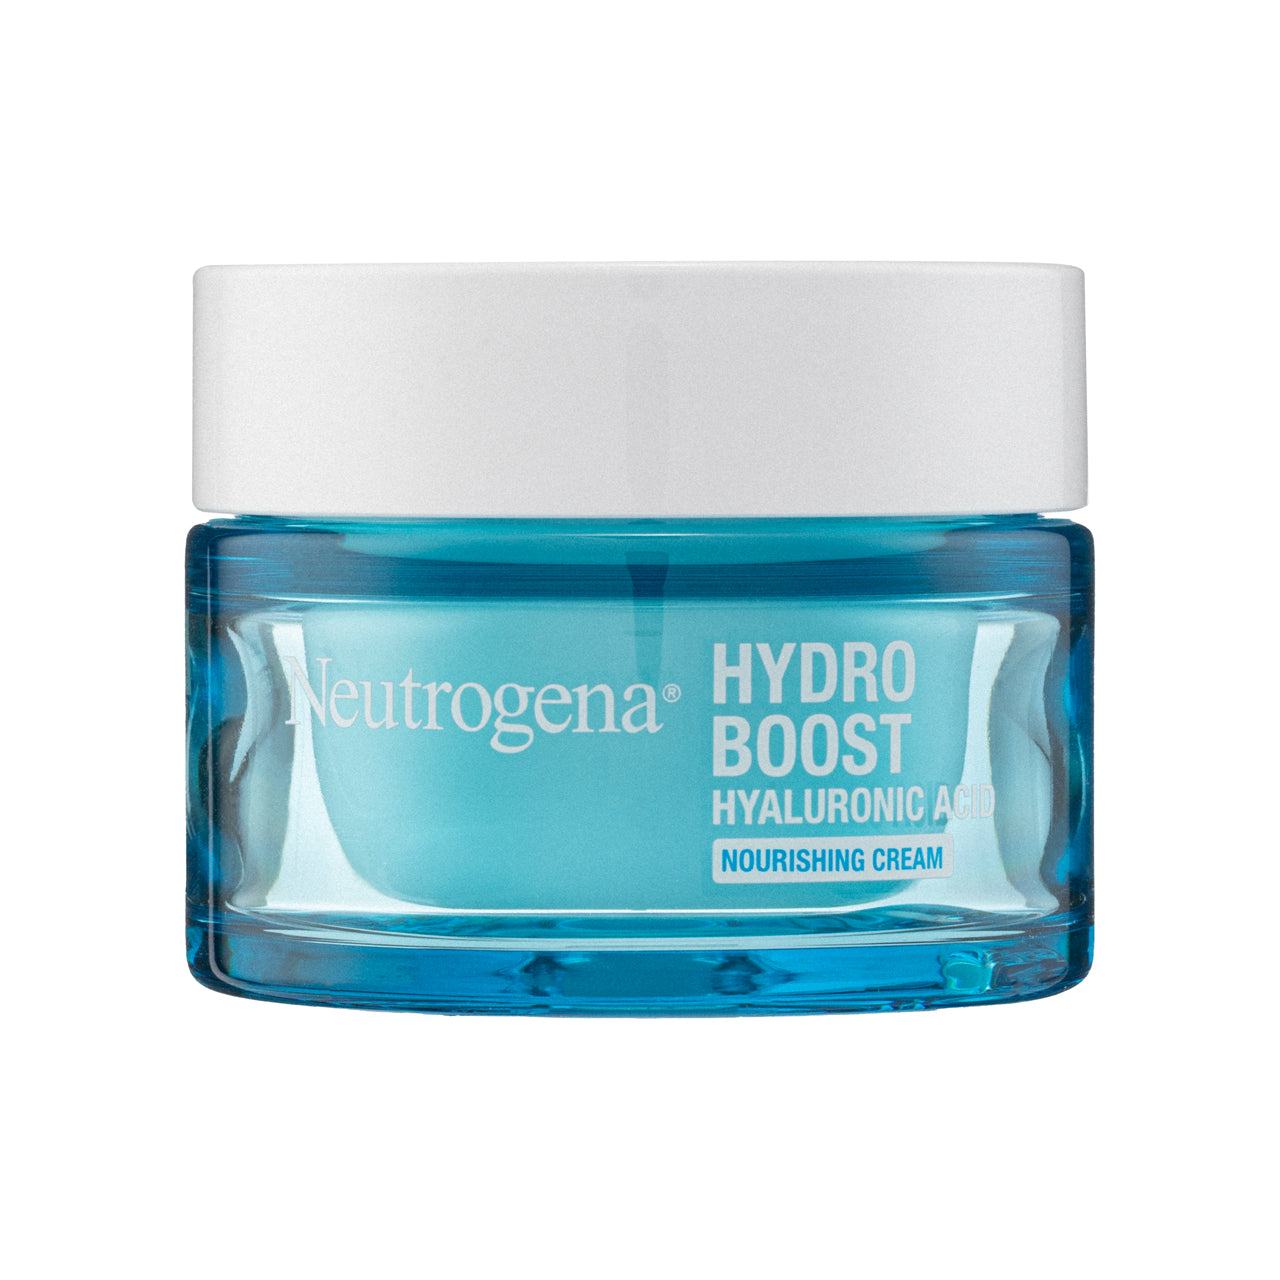 Neutrogena Hydro Boost Hyaluronic Acid Nourishing Cream 50g | Sasa Global eShop